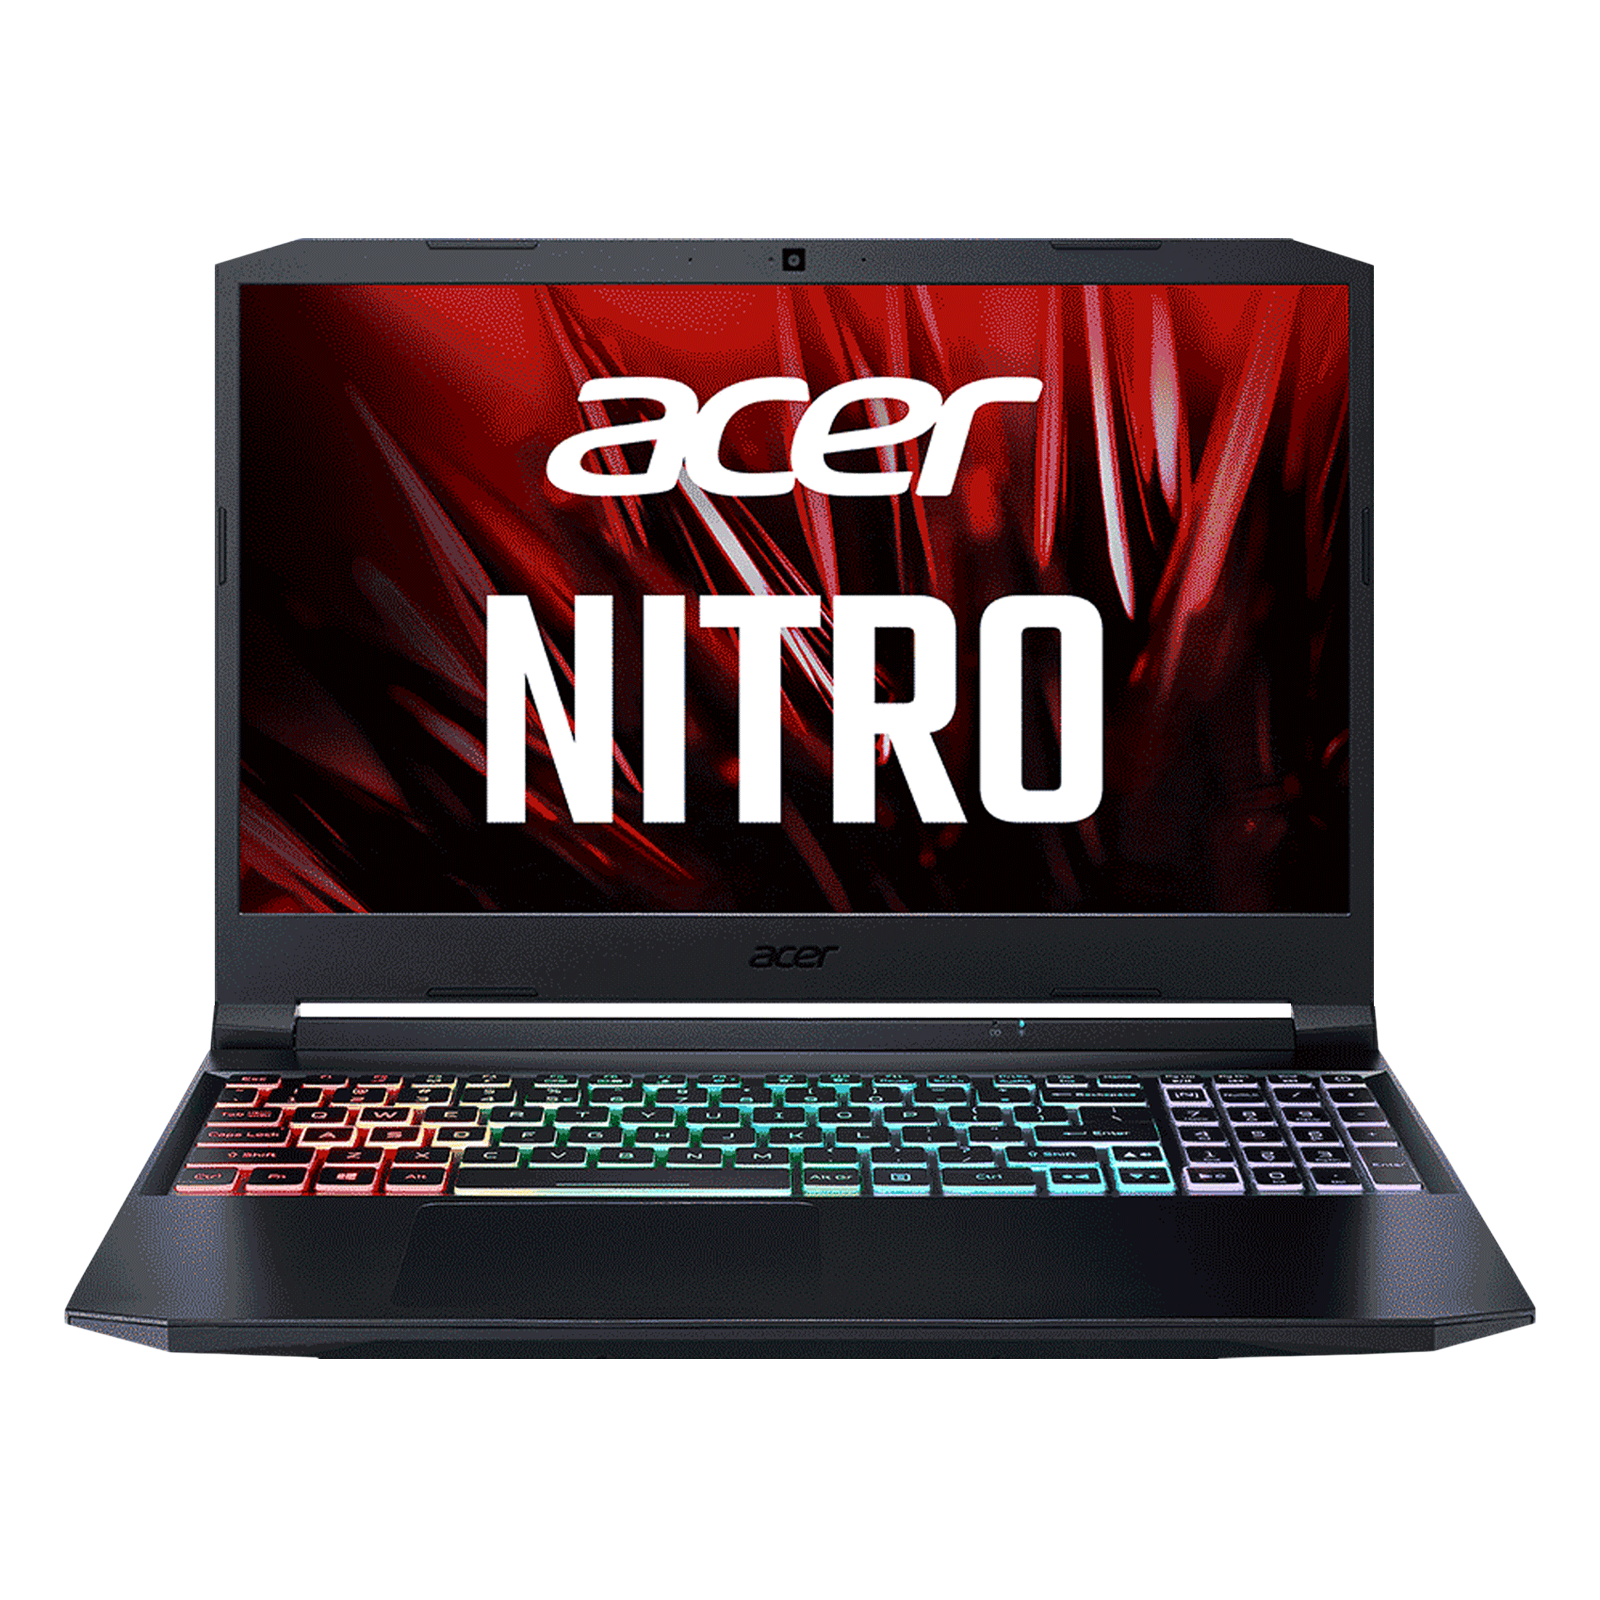 Acer Nitro 5 Intel Core i5 11th Gen (15.6 inch, 8GB, 1TB and 256GB, Windows 10, NVIDIA GeForce RTX 3050 Graphics, FHD IPS Display, Black, NH.QENSI.002)_1